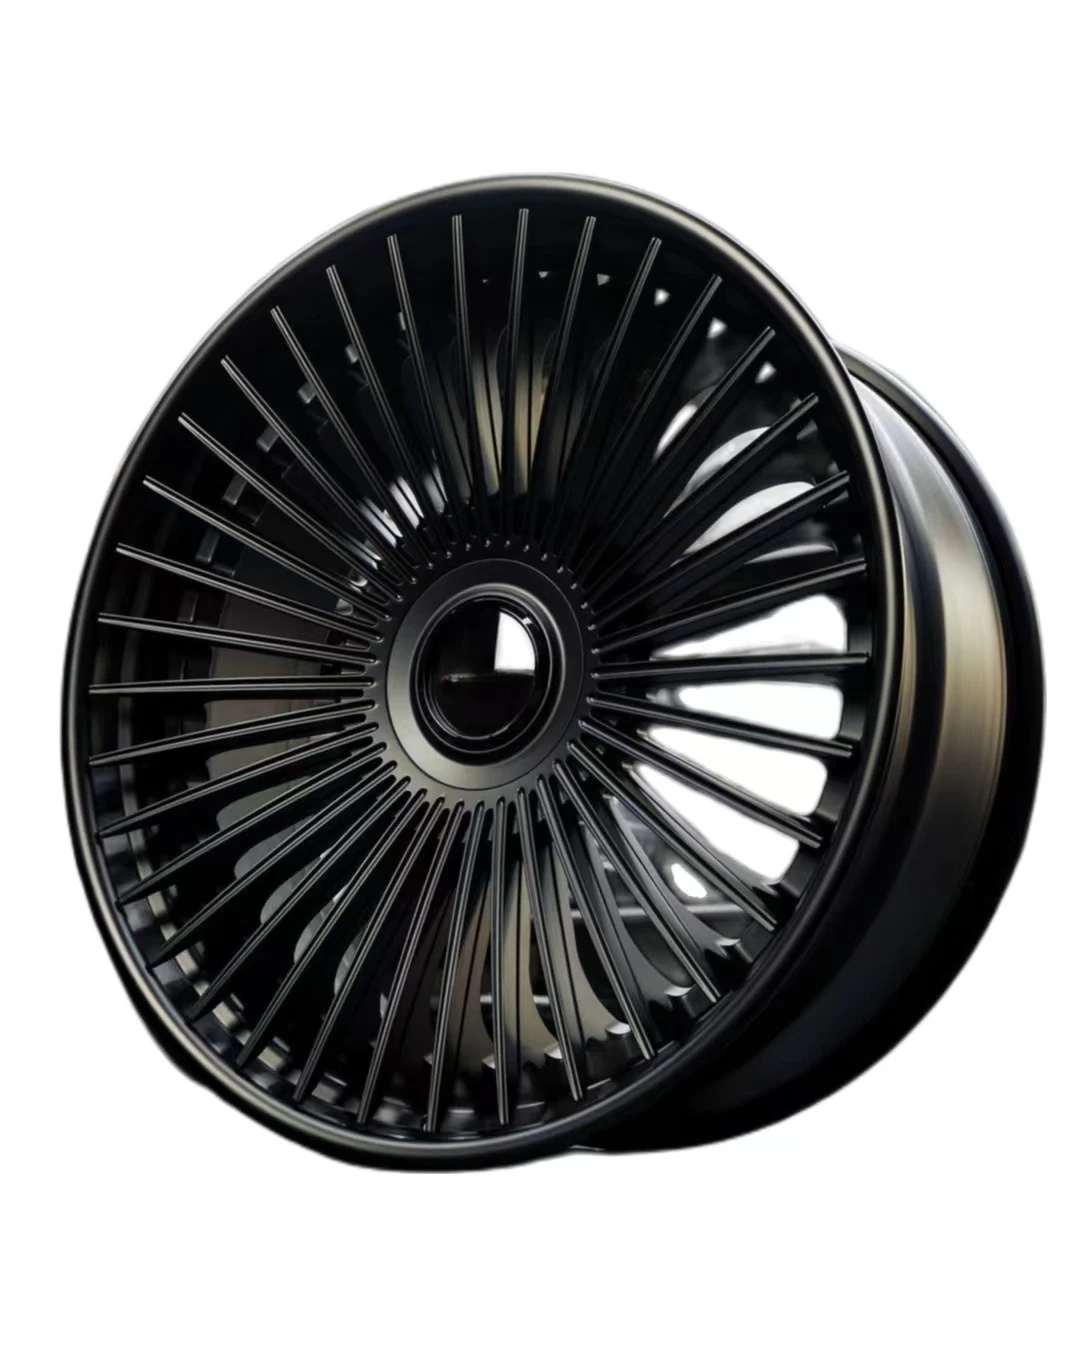 

Bku racing 22 inch wheels 5x114.3 custom forged alloy passenger car wheels hyper black replica vossenn rims